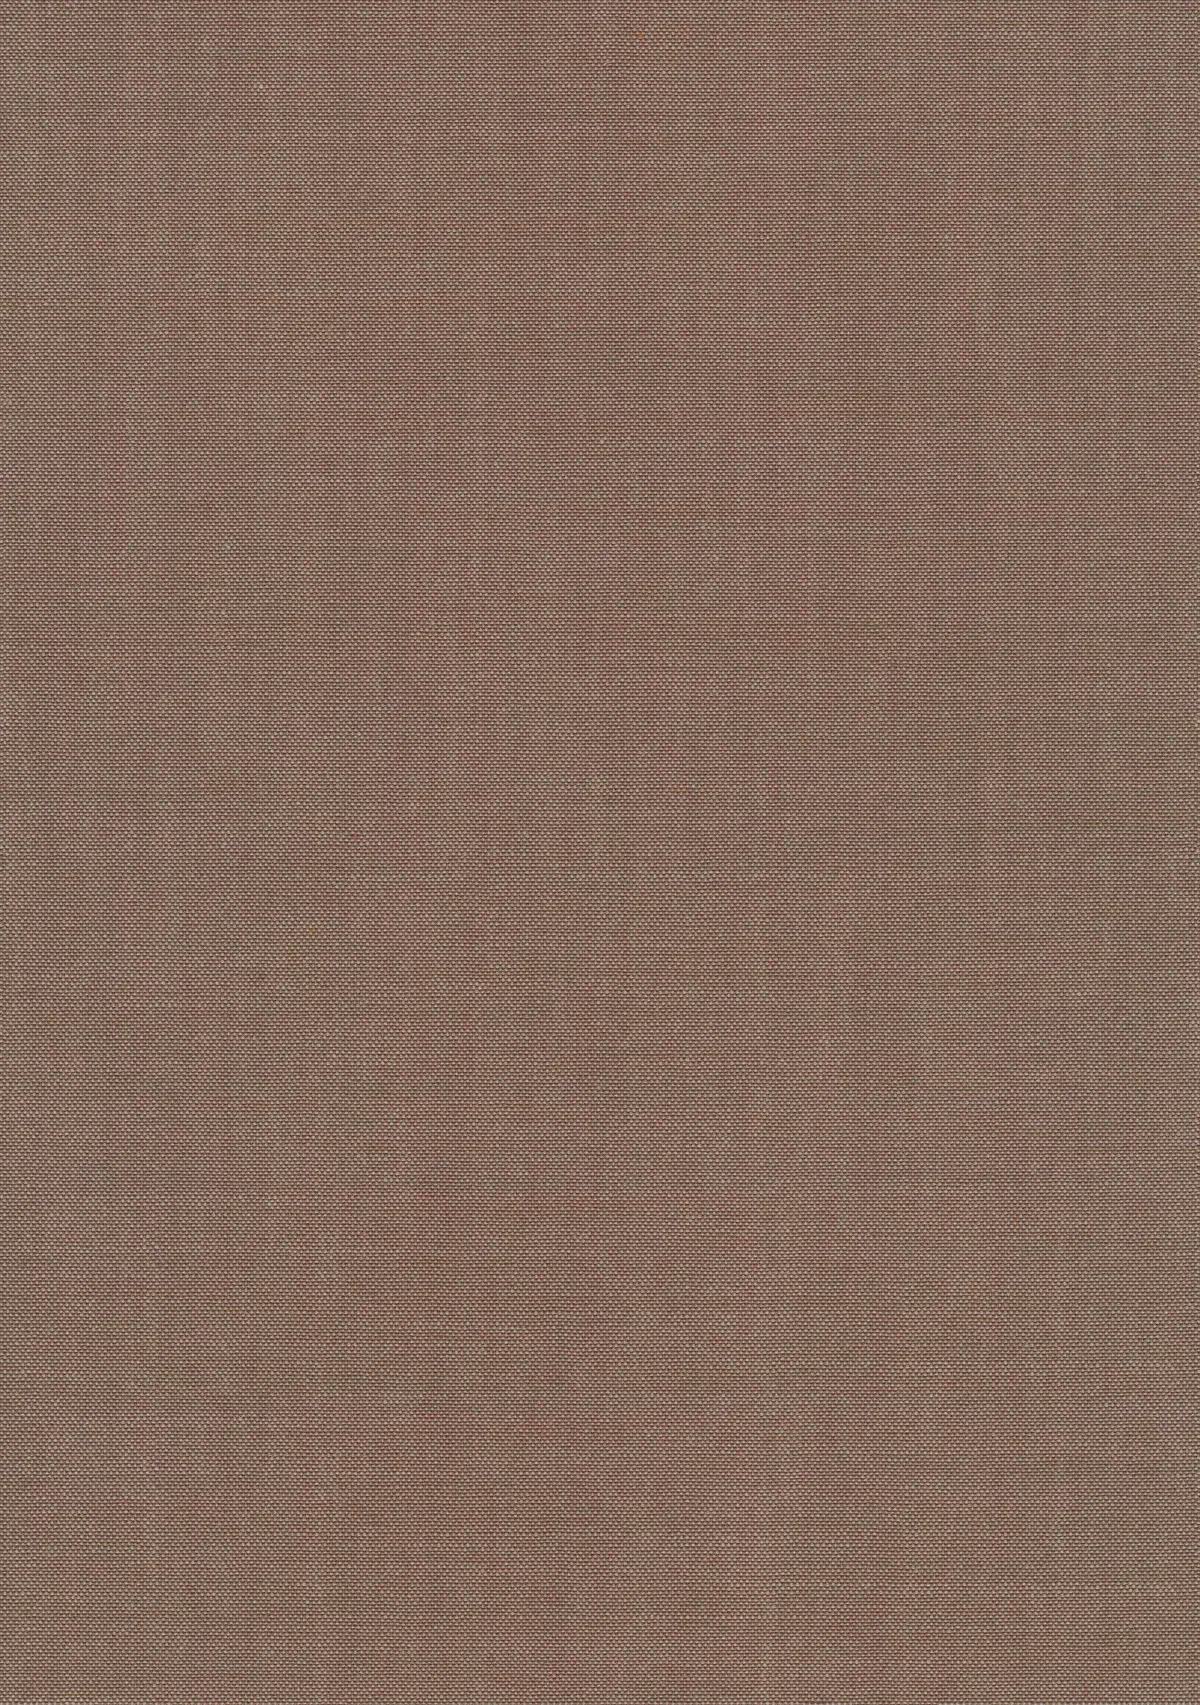 Fabric sample Remix 3 326 brown